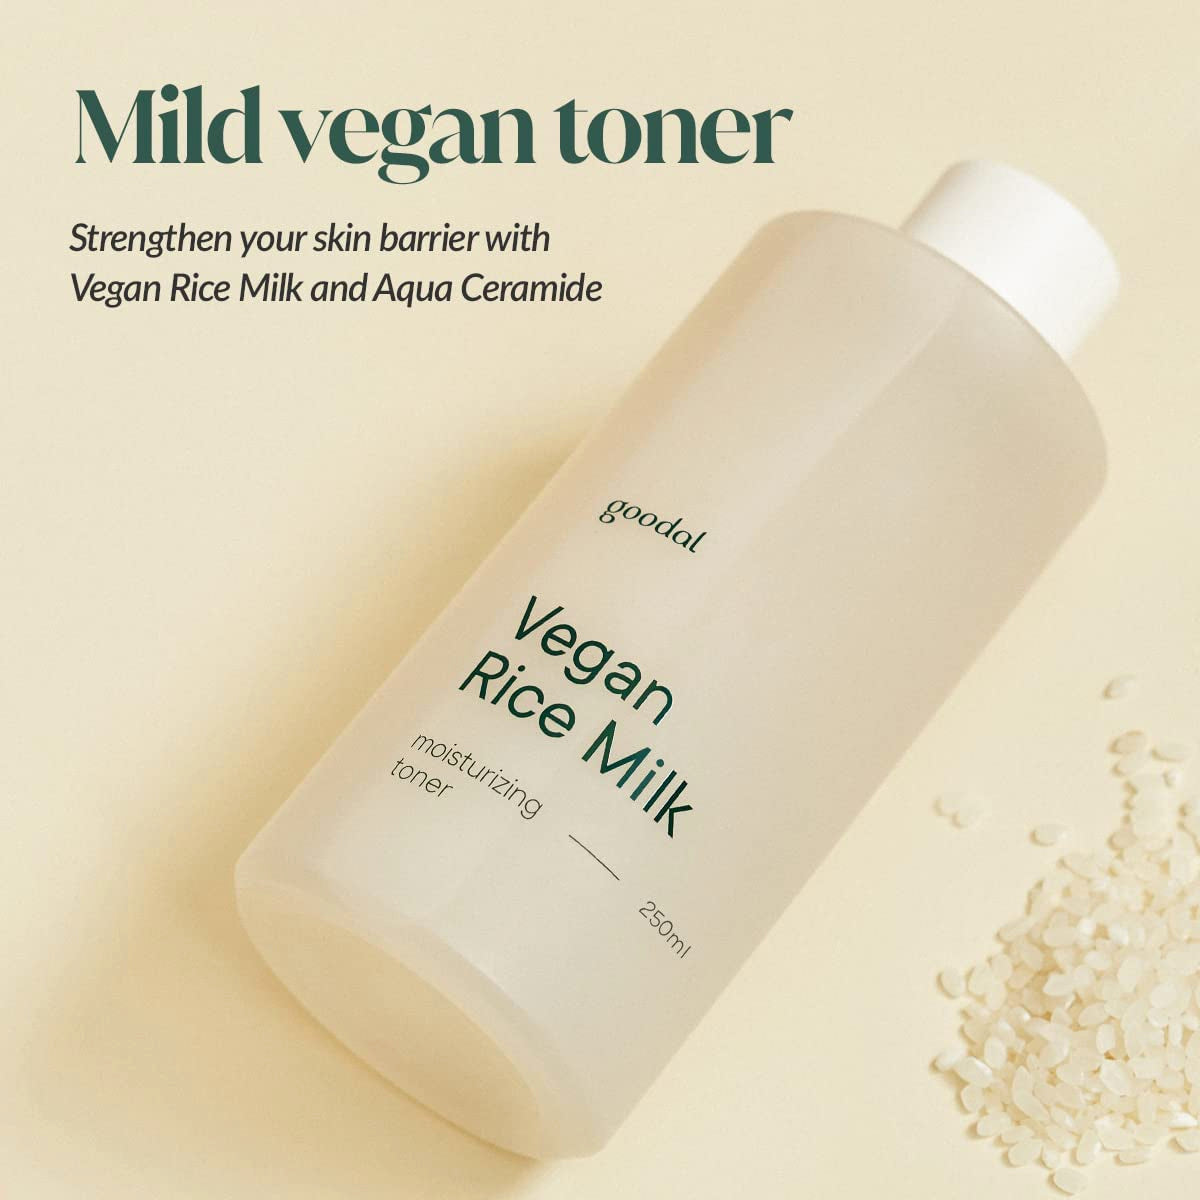 Goodal Vegan Rice Milk Moisturizing Toner Beauty Goodal   